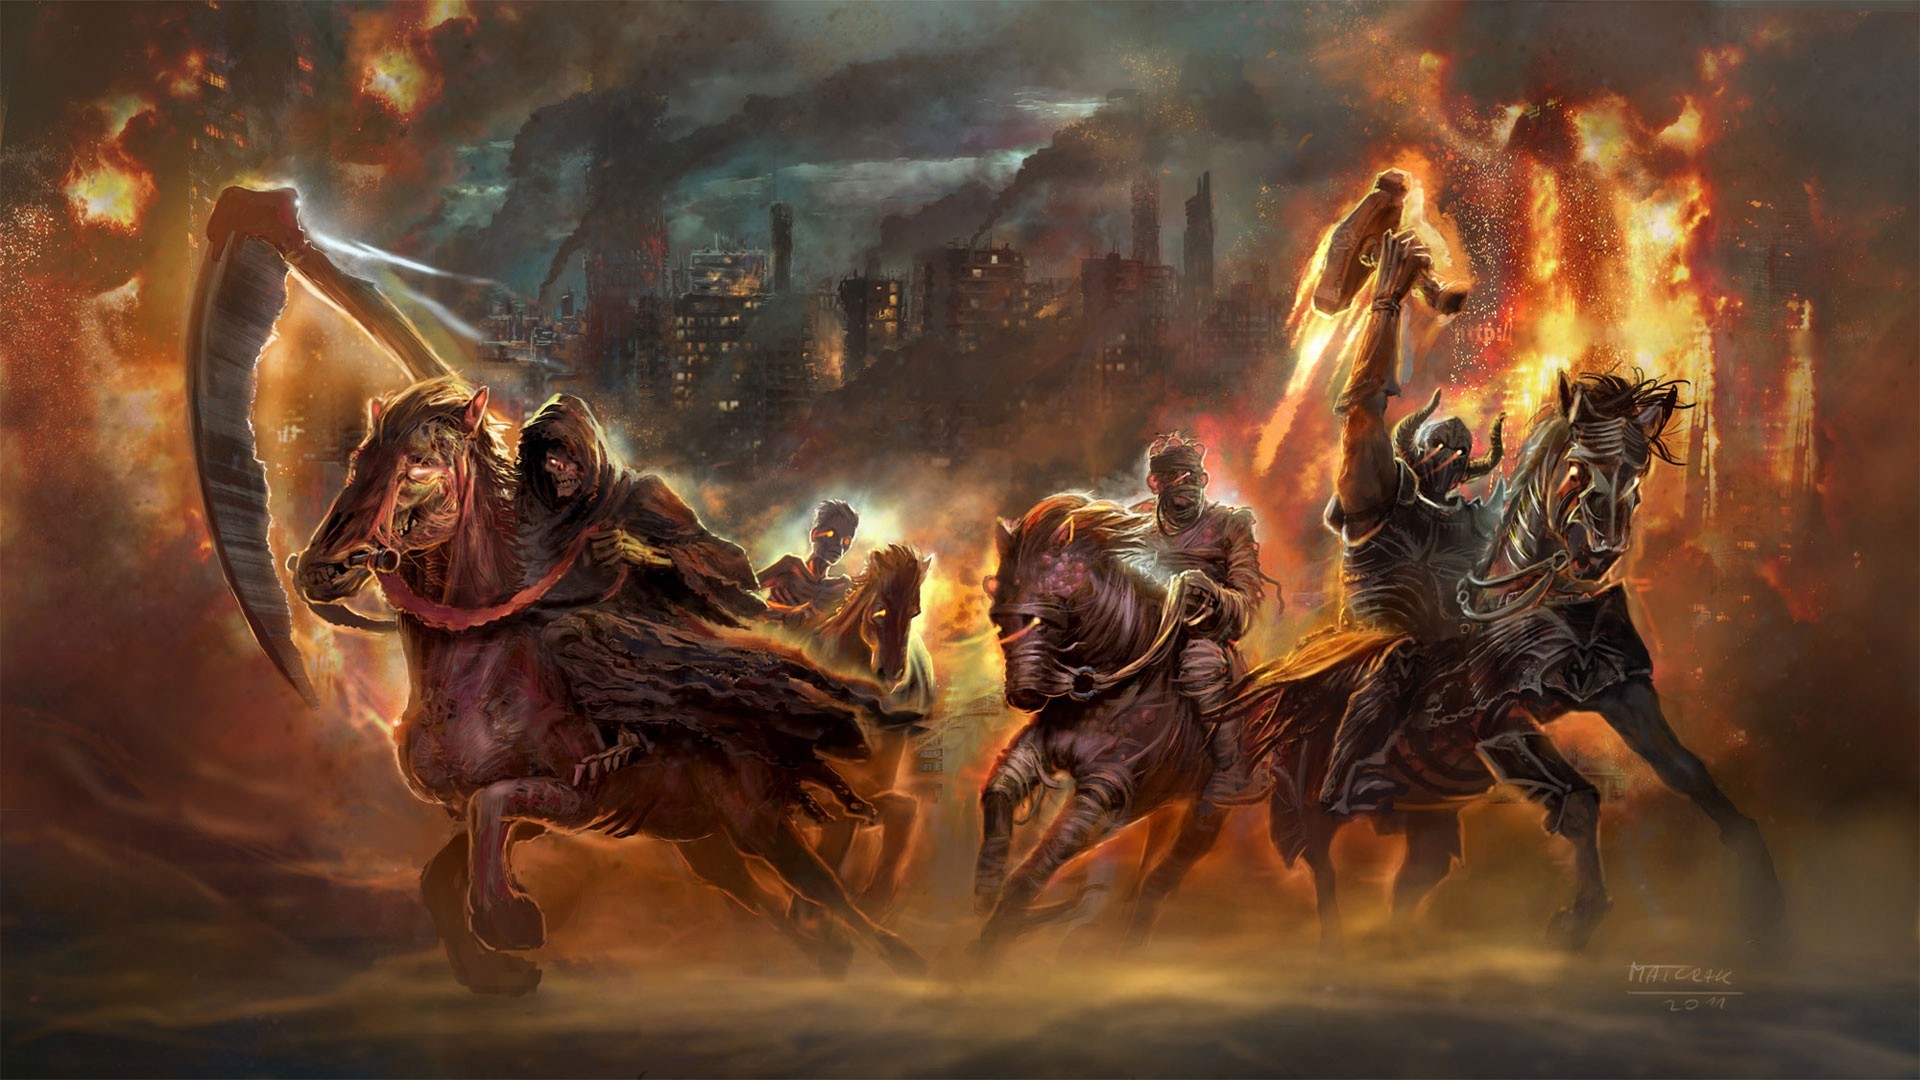 Four Horsemen Of The Apocalypse Horse Fantasy Art Apocalyptic Fire Destruction Scythe War 1920x1080